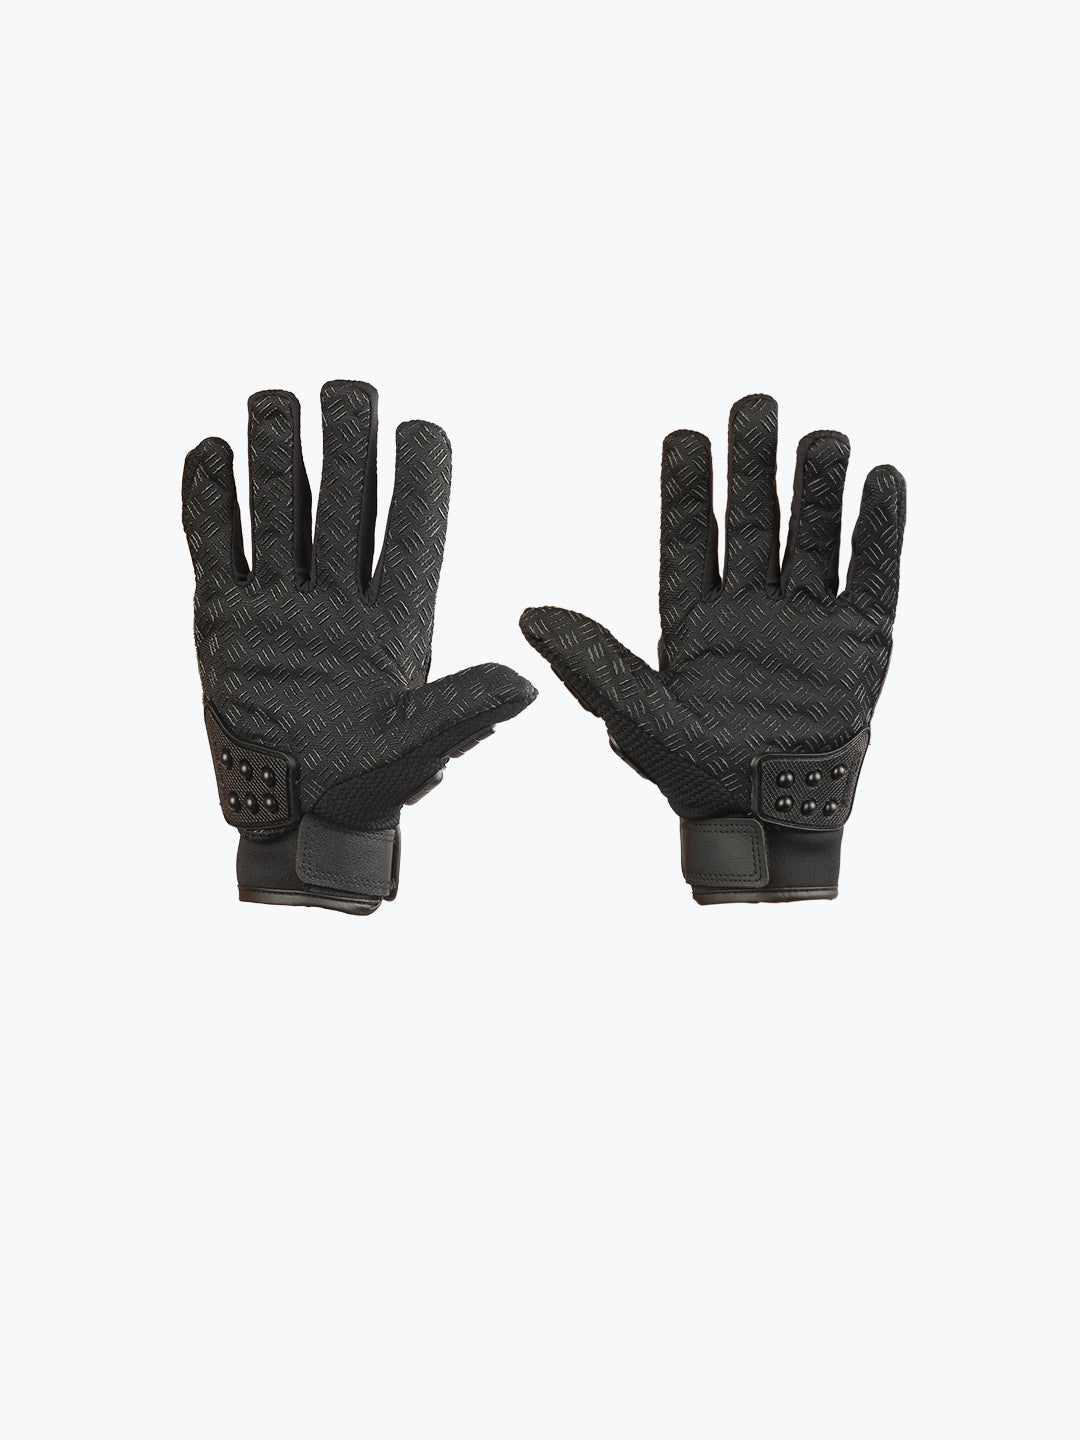 MADBIKE Glove Black